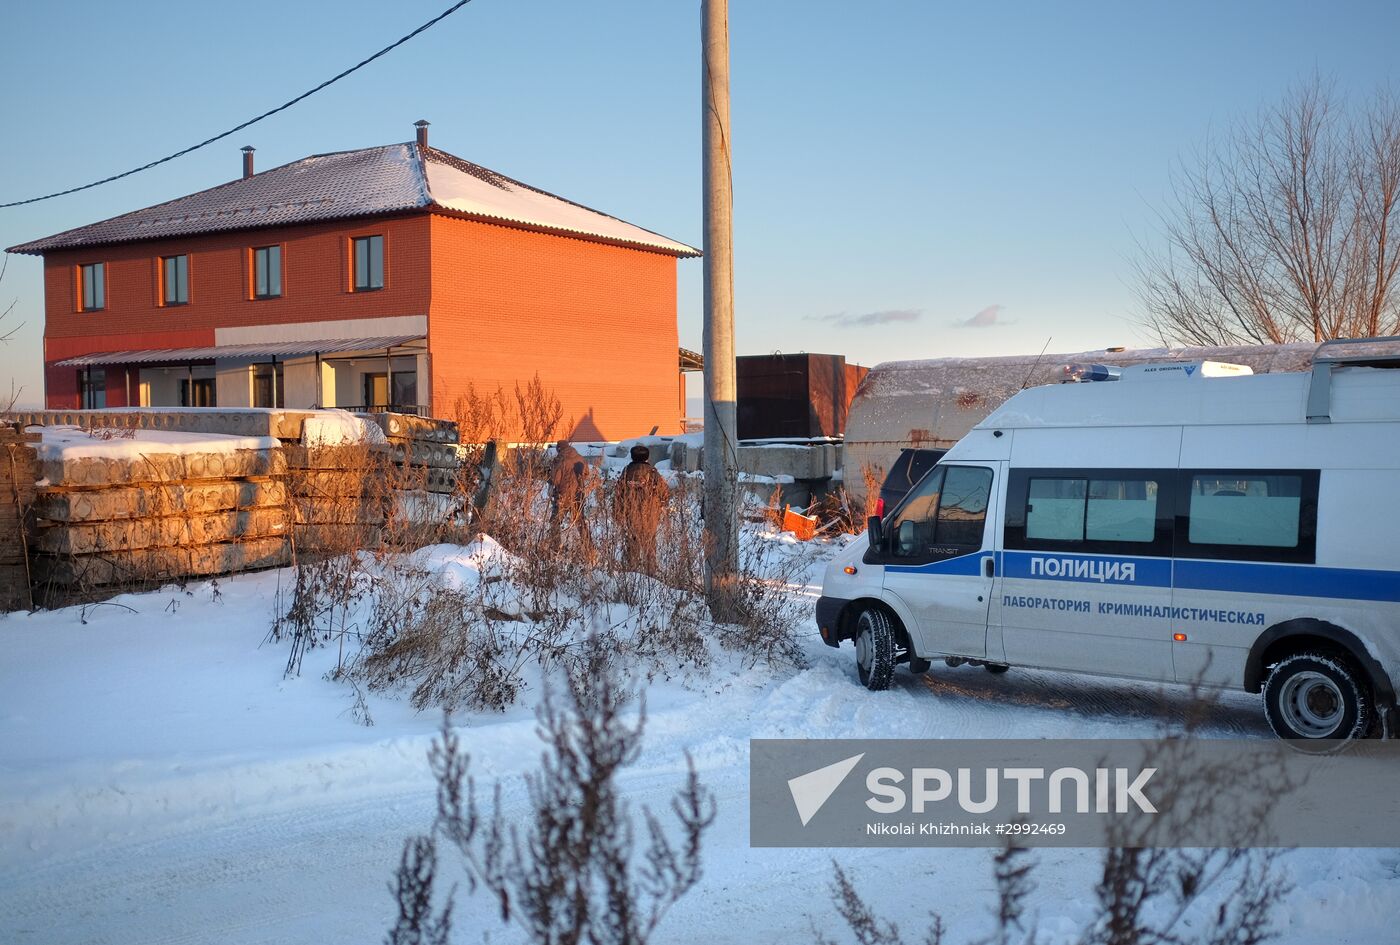 Unidentified criminals attacked local police Chief's house in Samara region